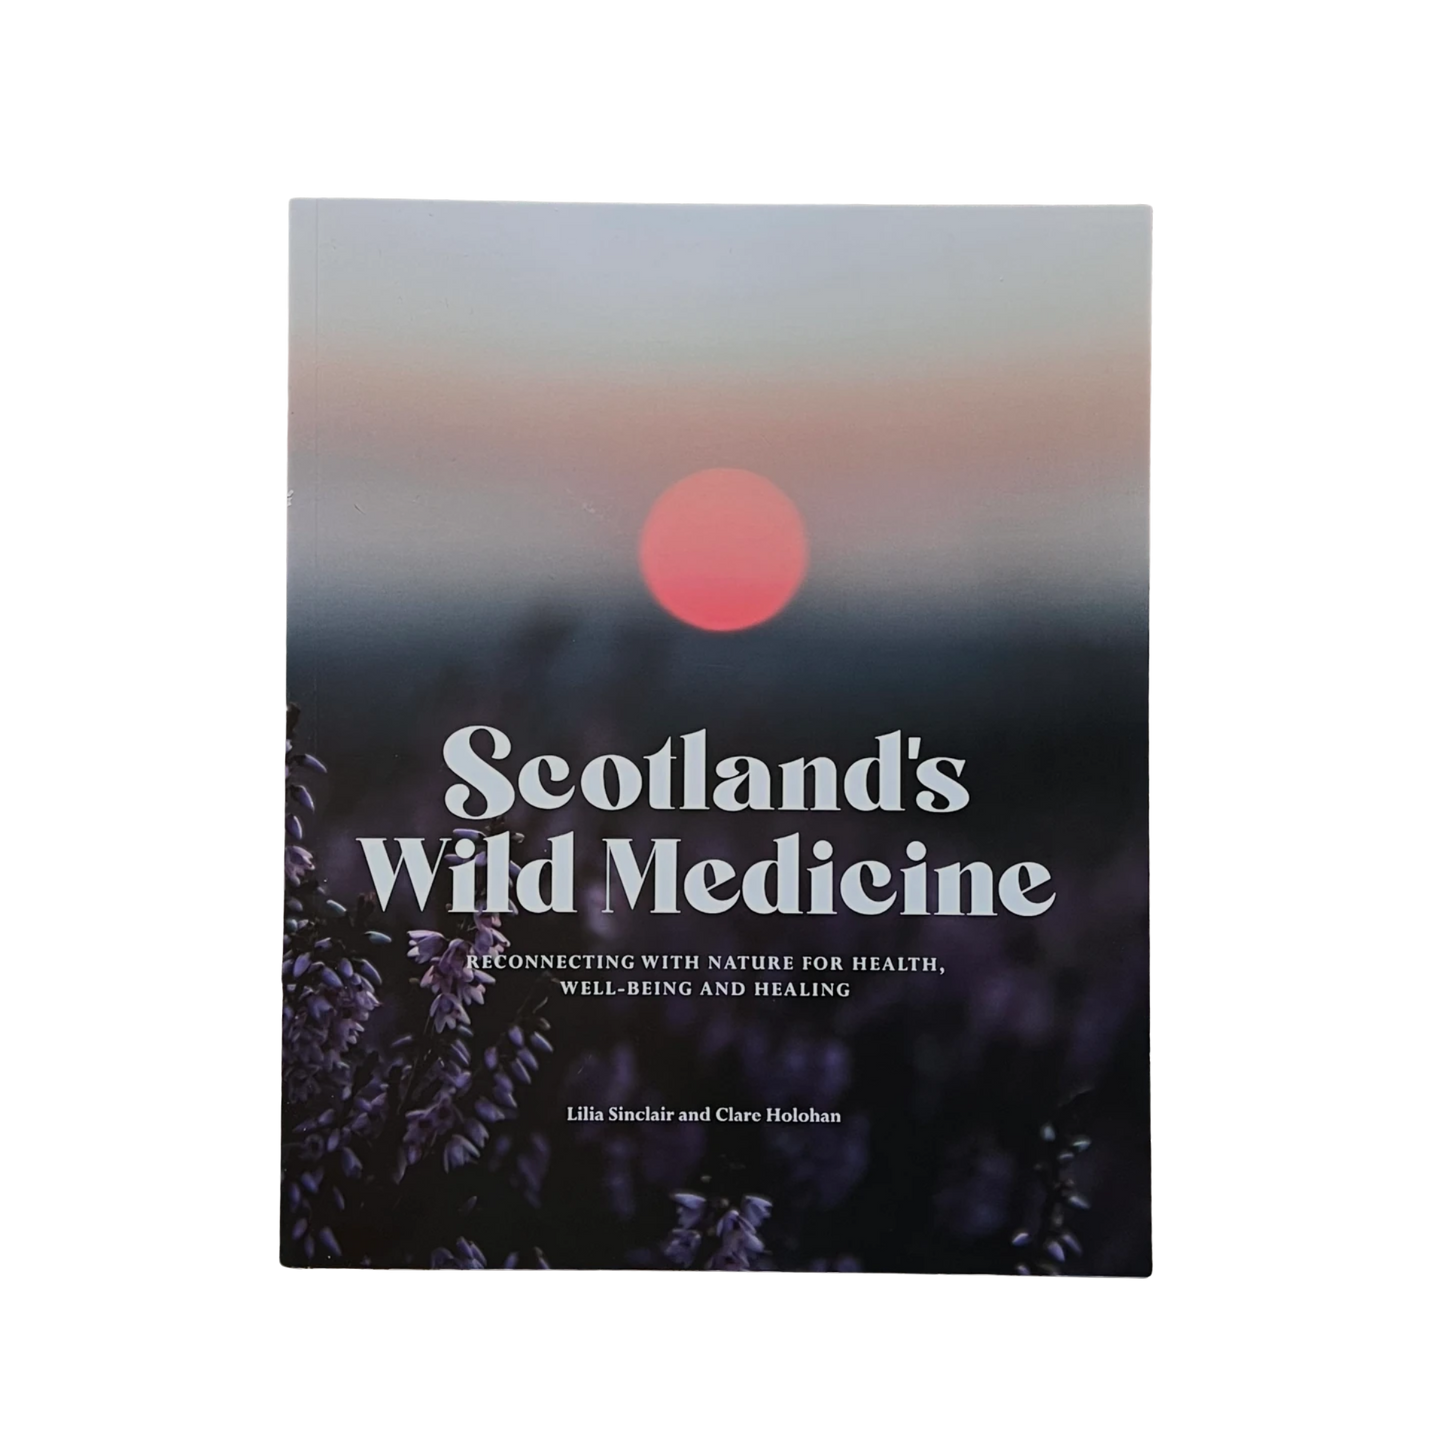 Scottish Wild Medicine Herbalism Foraging Book UK